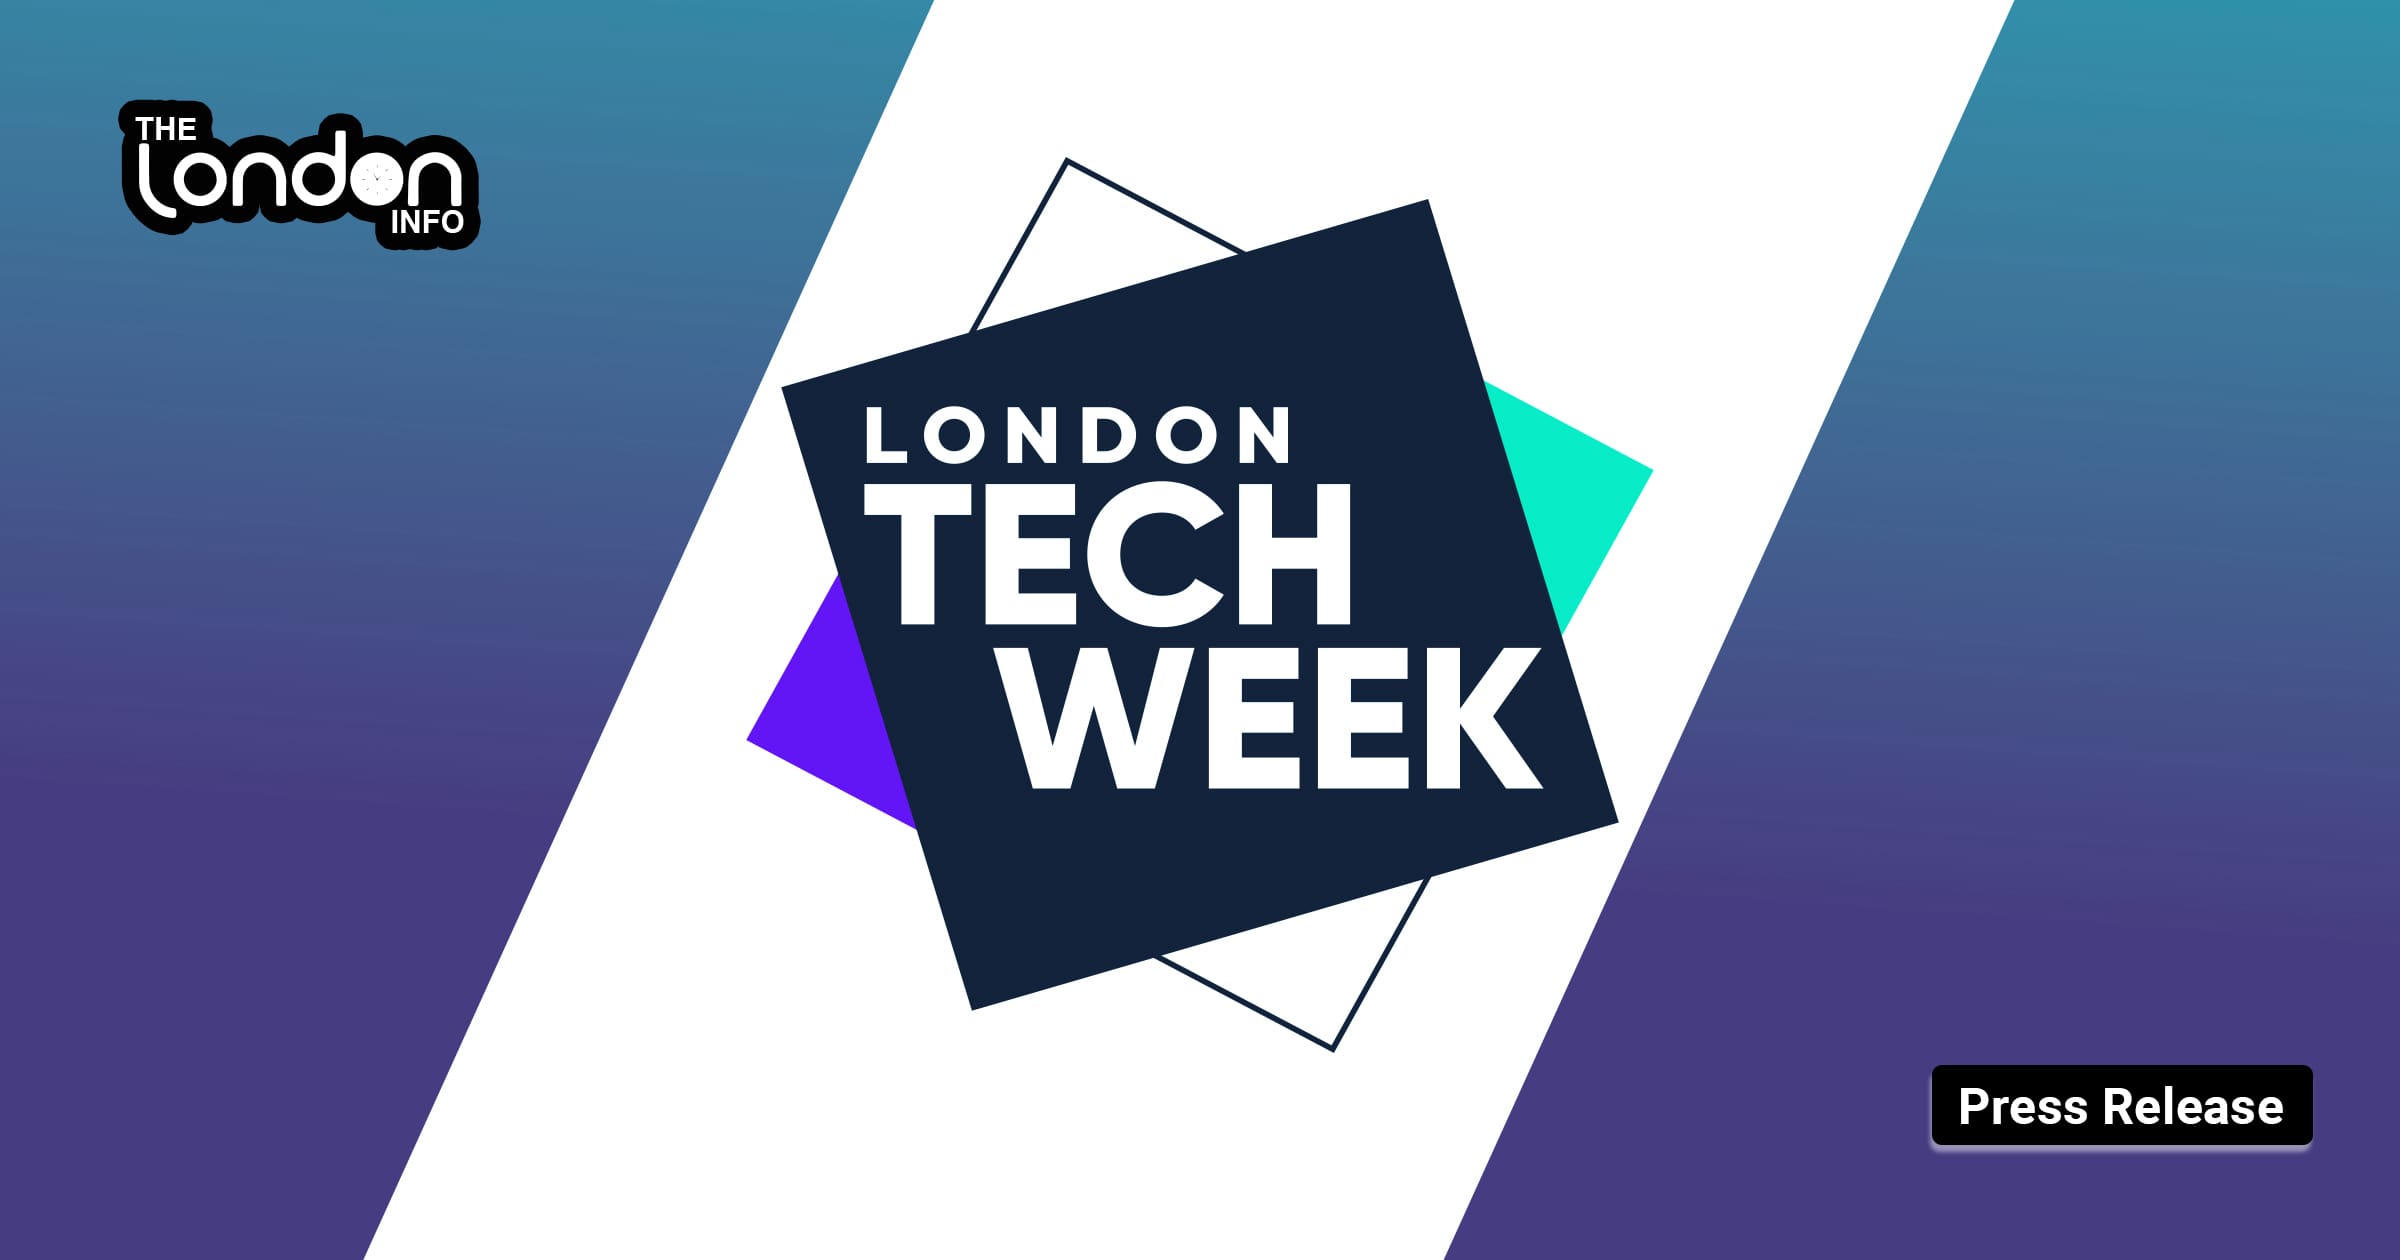 London tech week